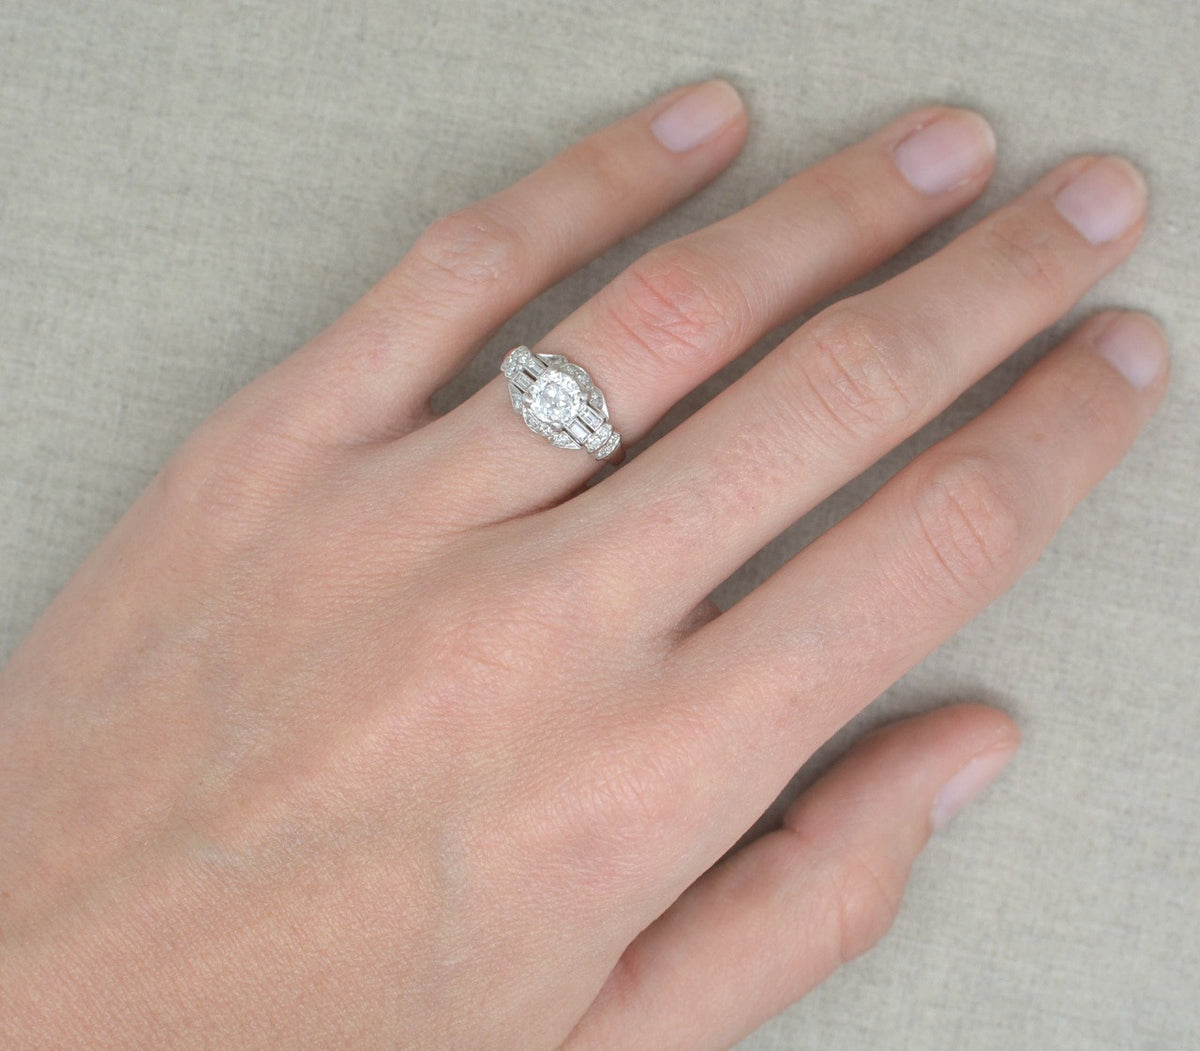 Art Deco, Retro Old European Cut Diamond Engagement Ring with Baguette Cut Accents